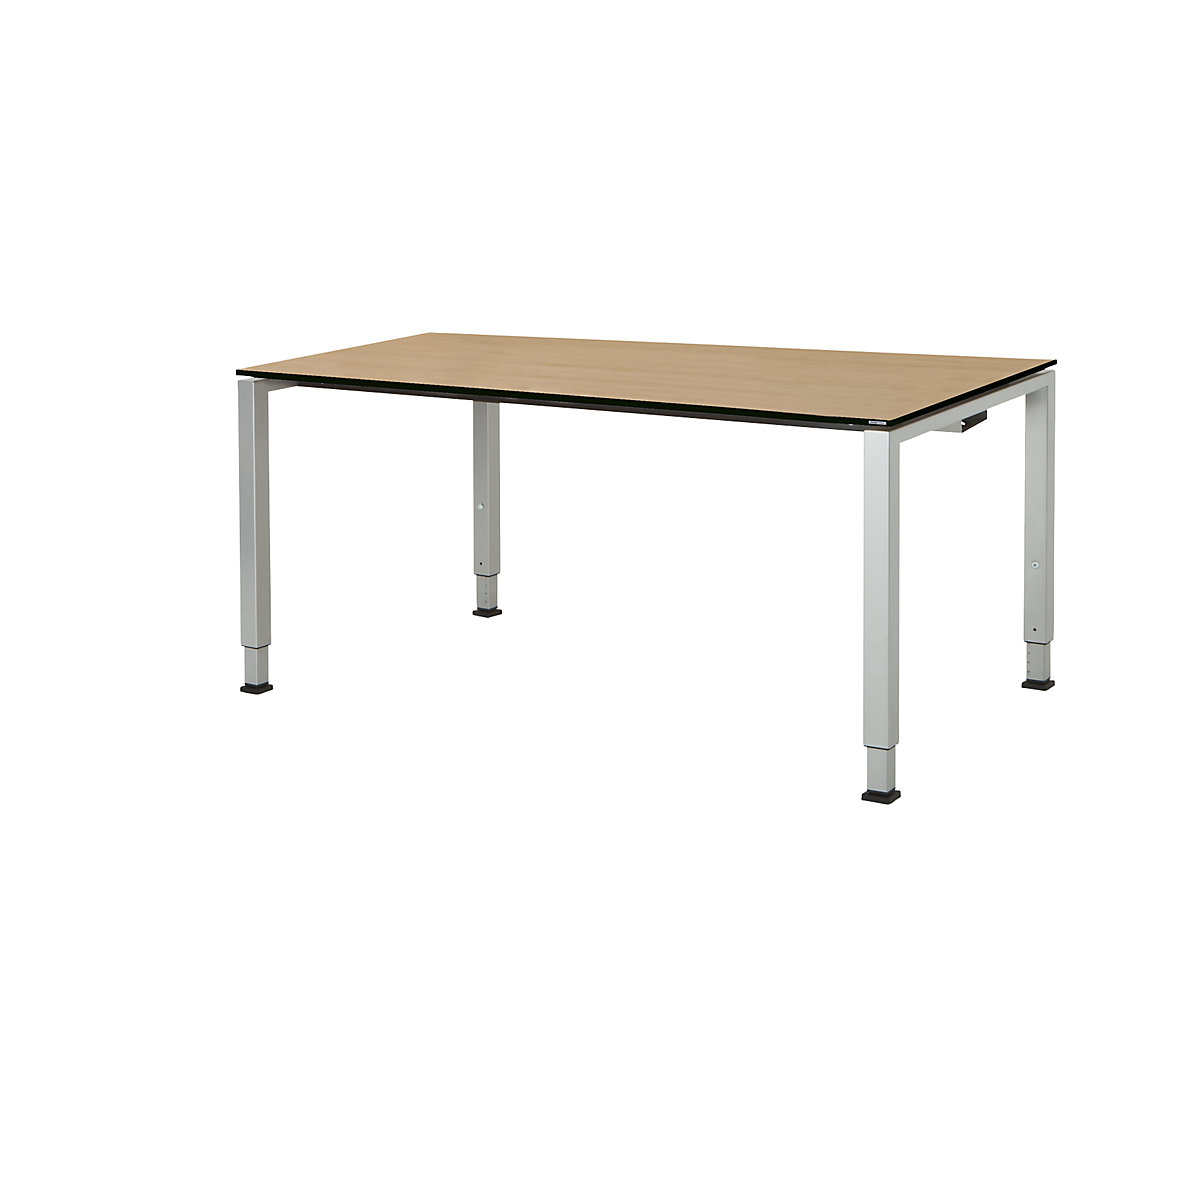 Pravokotna miza, s kvadratnim podnožjem - mauser